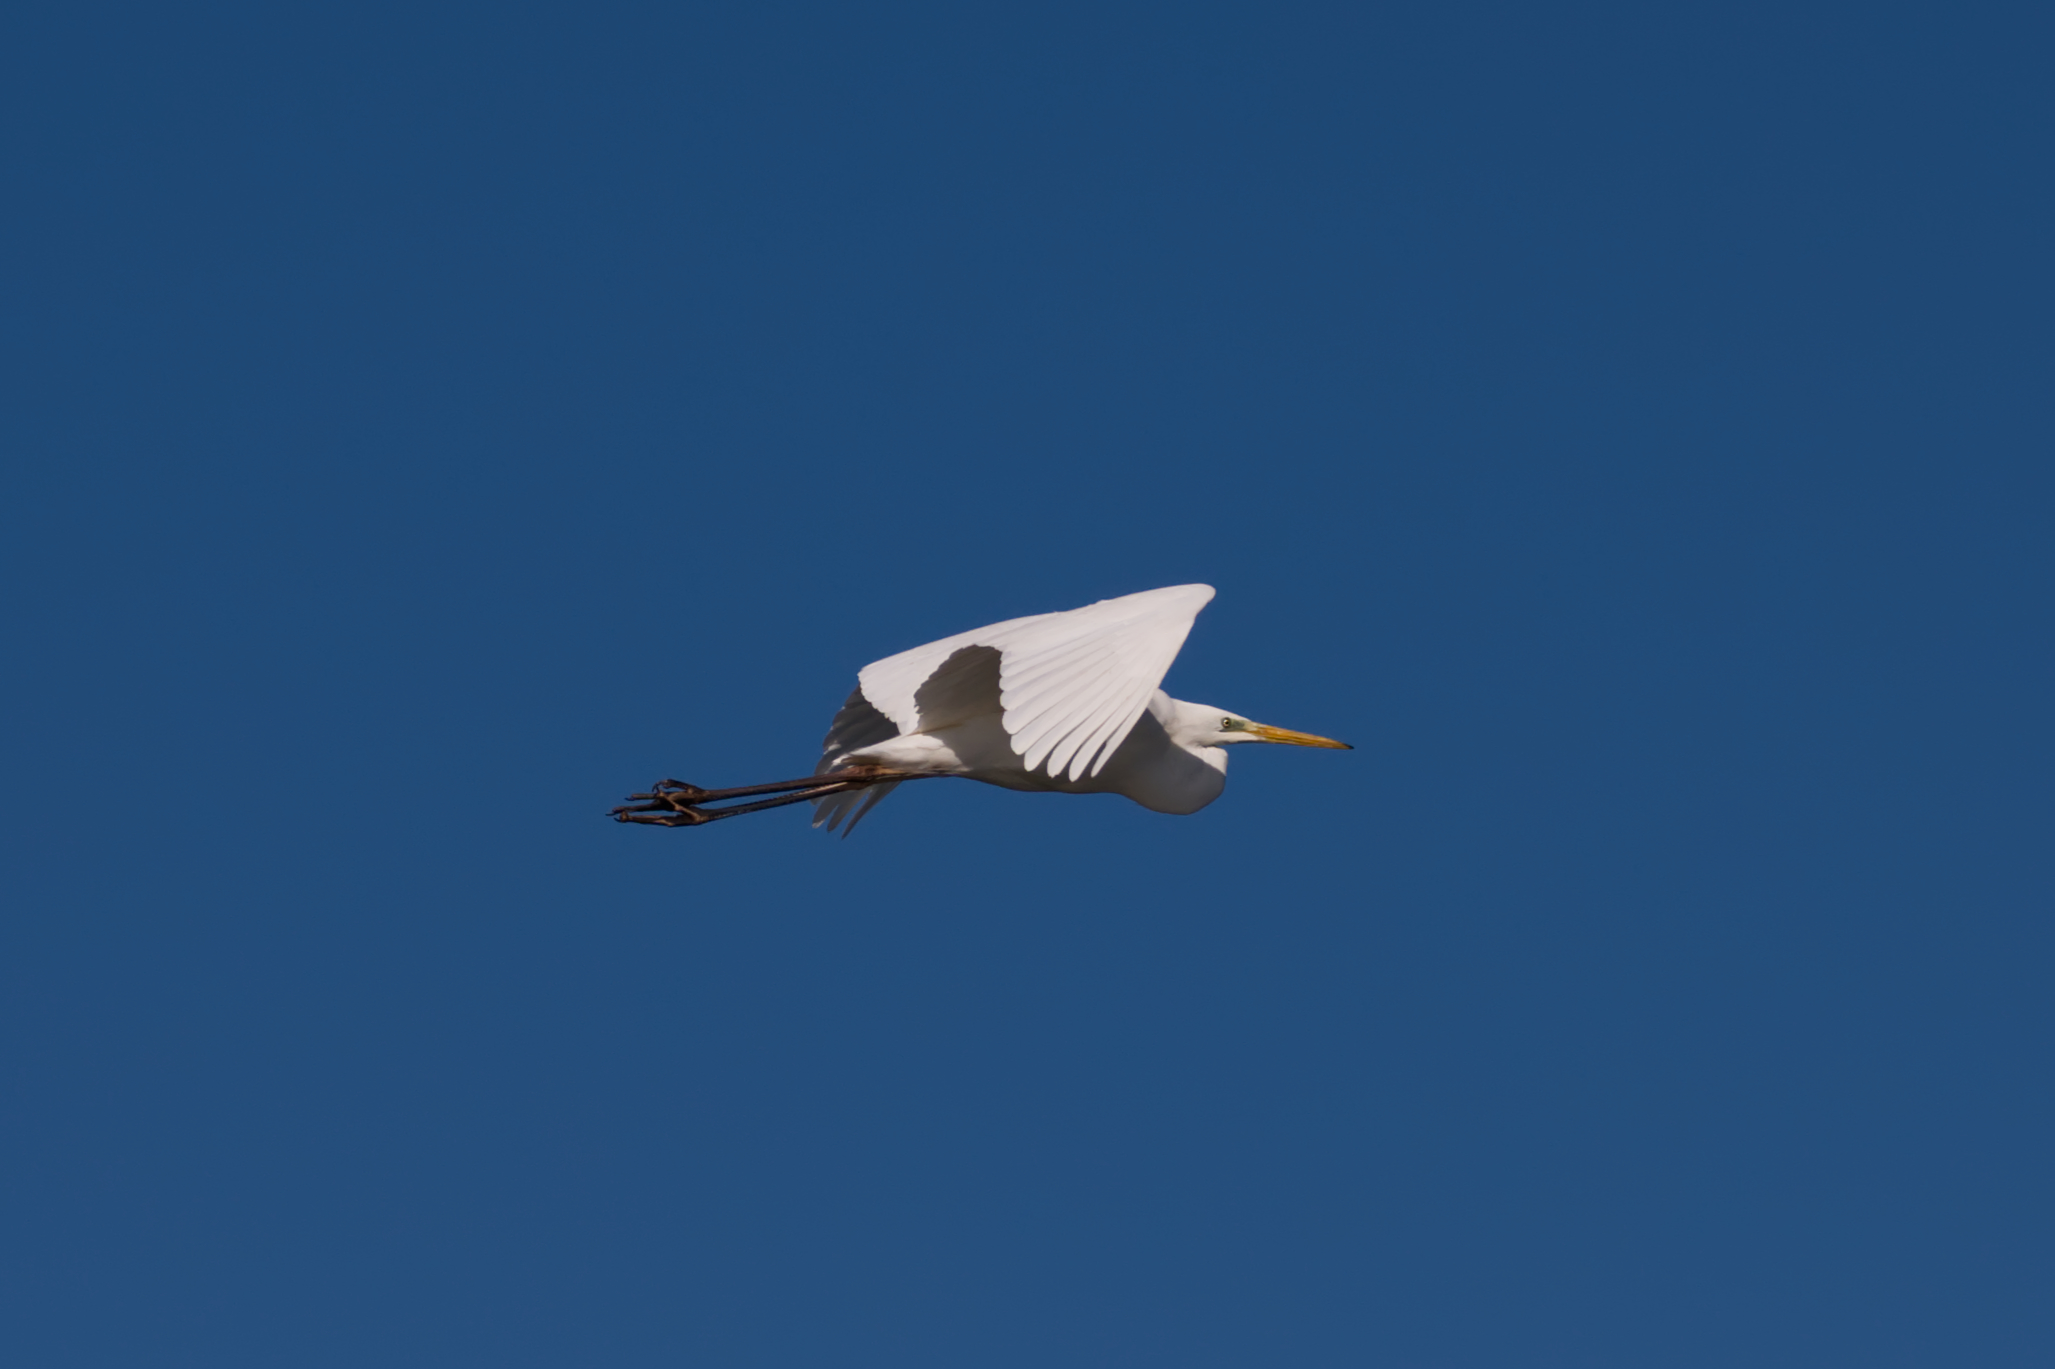 White heron in flight...